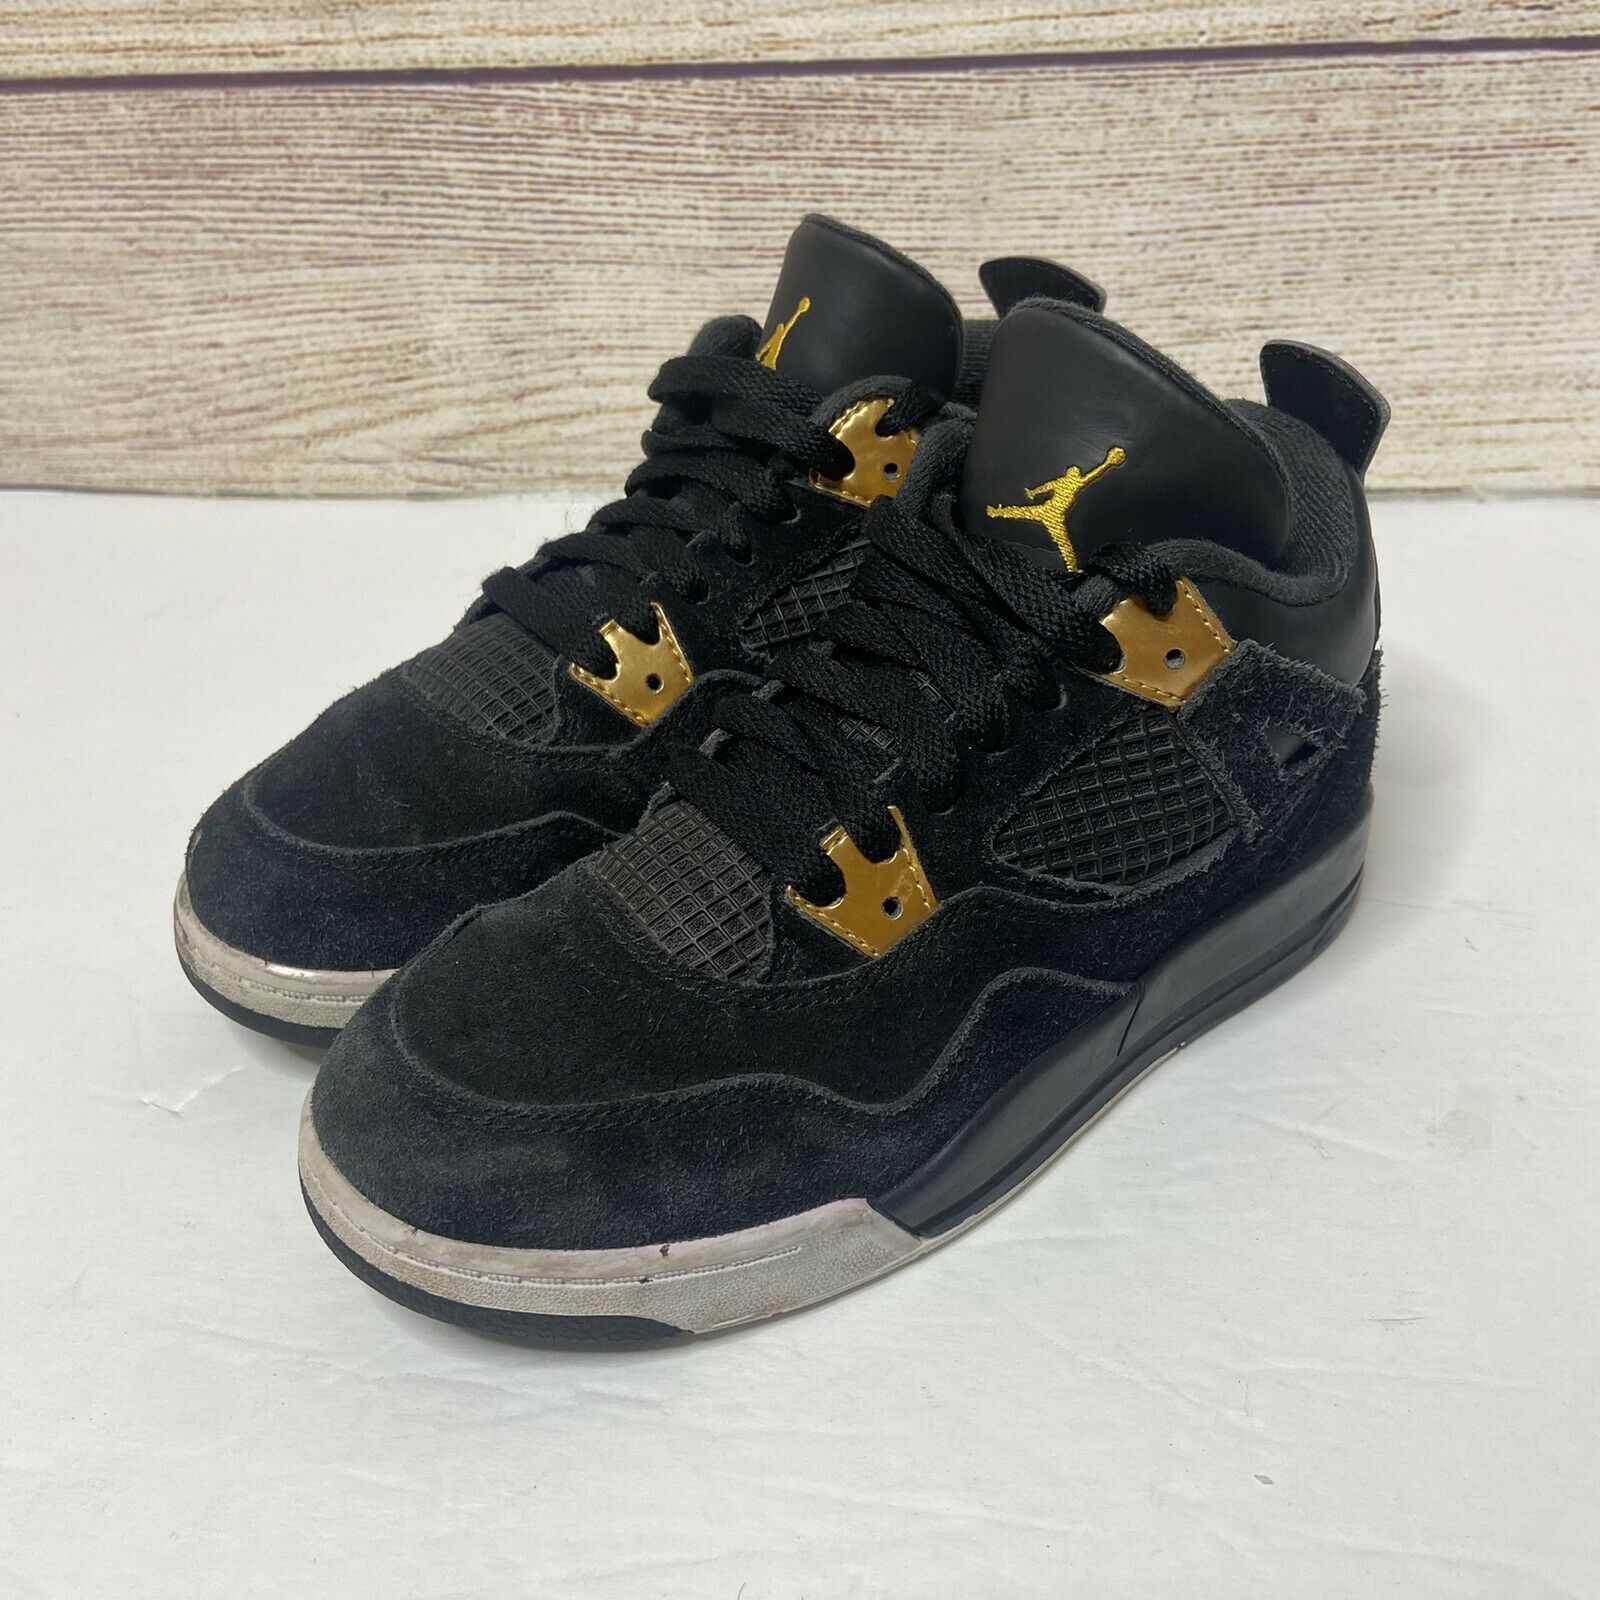 Nike Boys Air Jordan 4 Retro 308499-032 Black Basketball Shoes - Lace Up Size 2Y